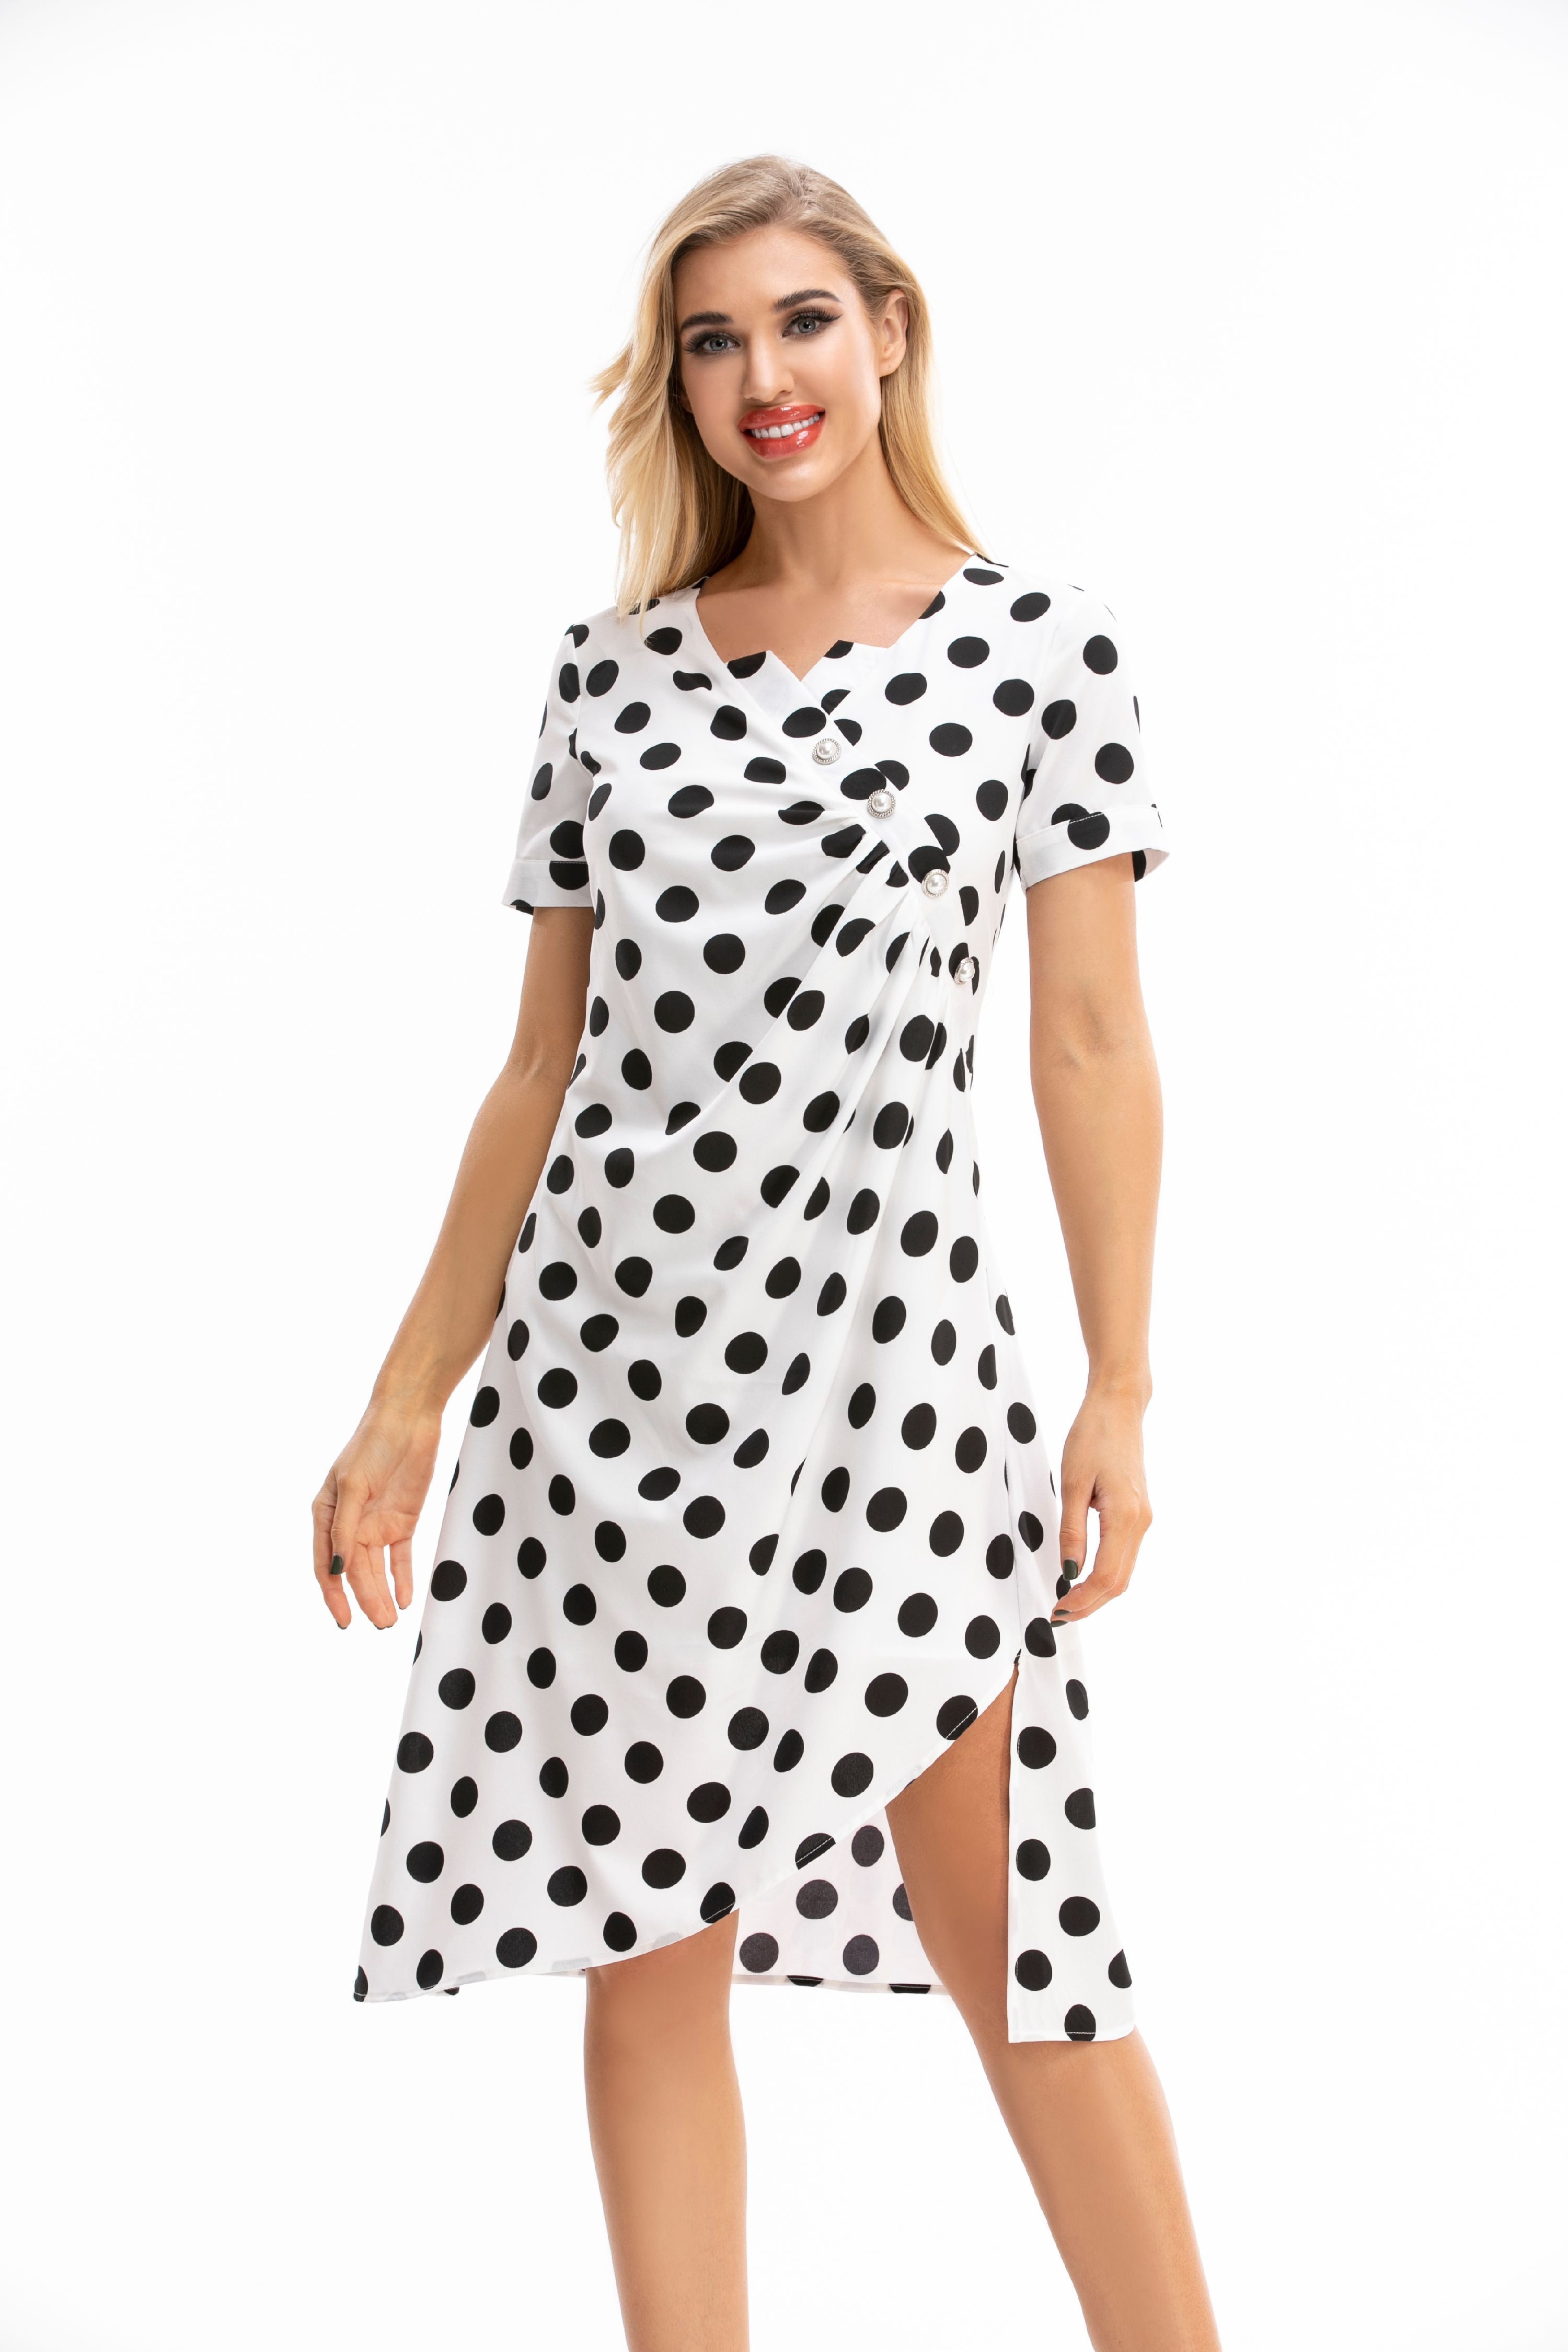 TOP SHE - Women's Polka Dot Print Pearl Button Dresses Casual Short ...